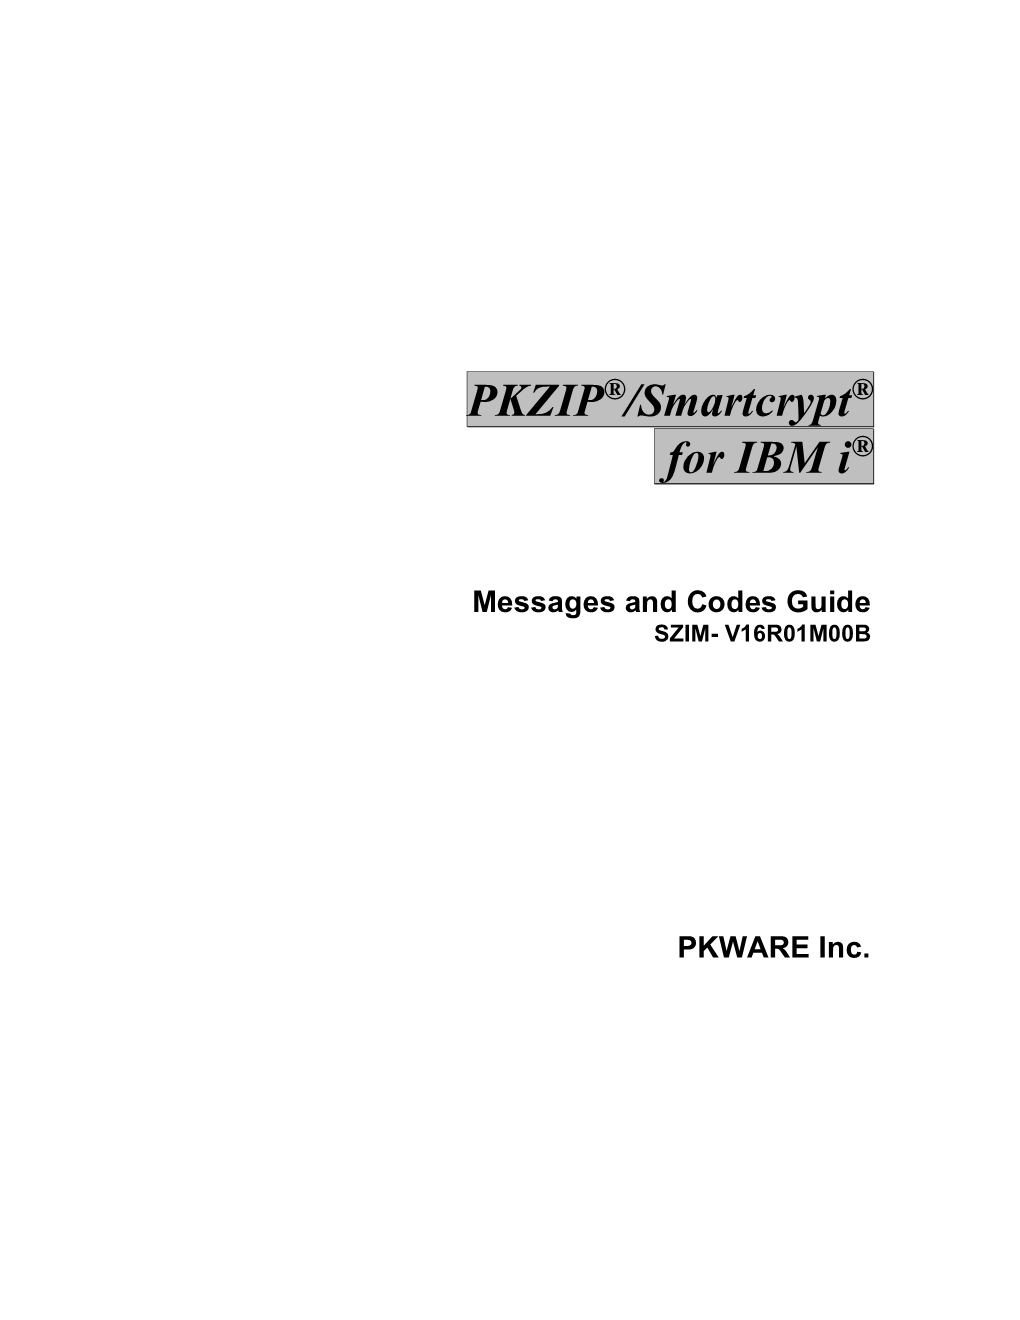 PKZIP®/Smartcrypt® for IBM I®